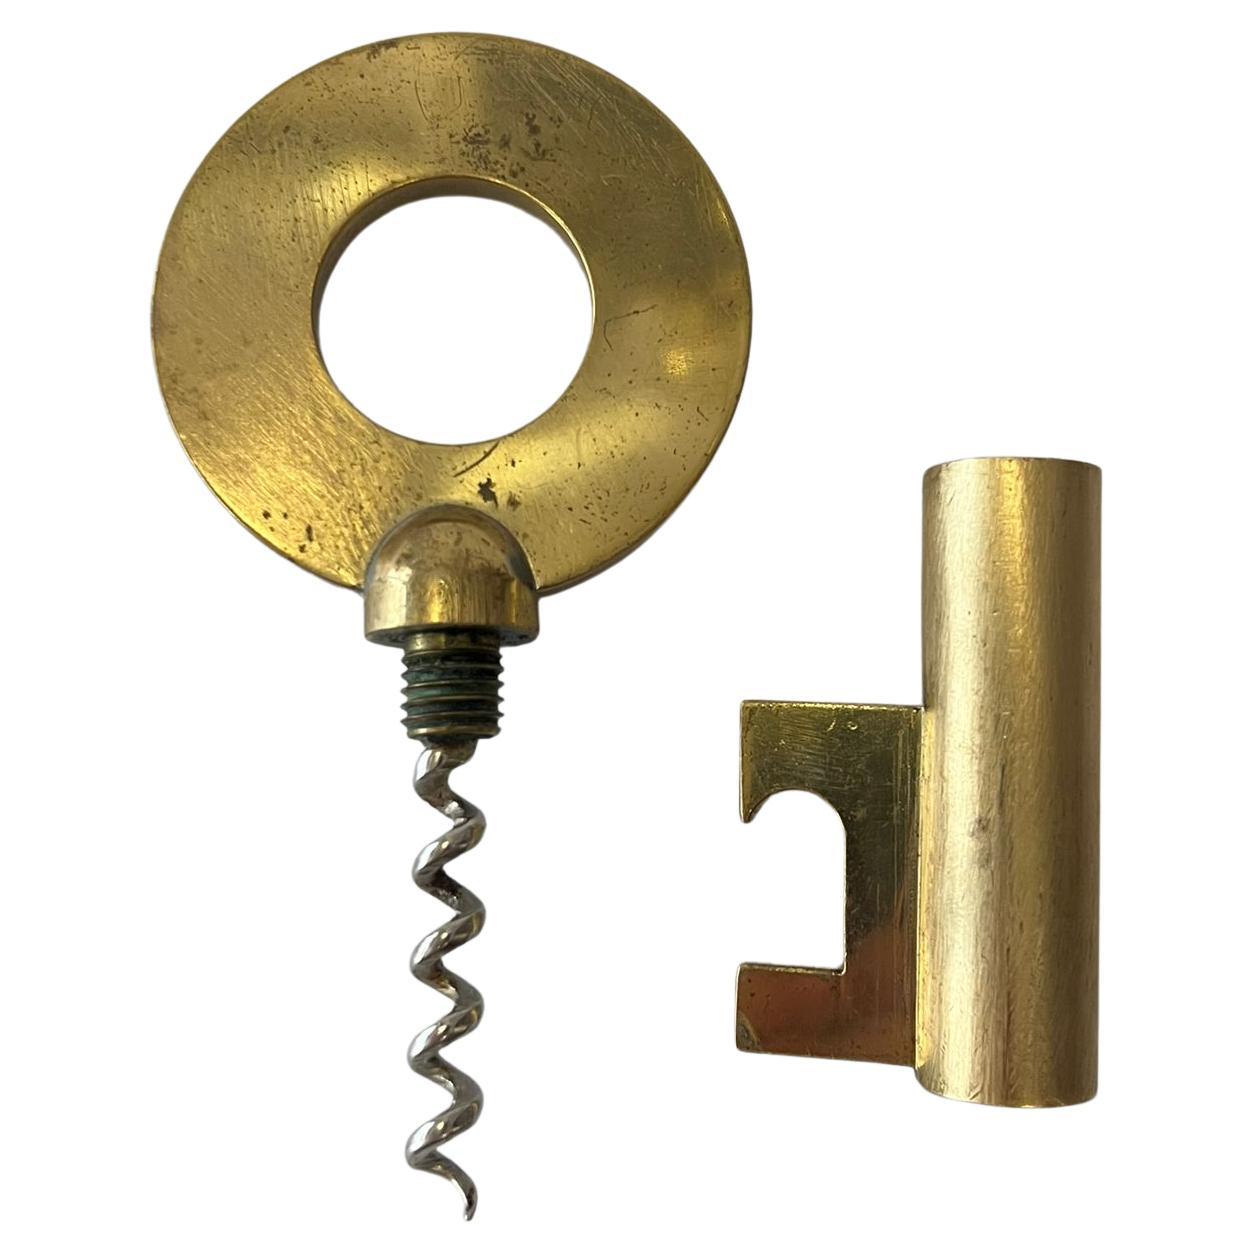 Brass Corkscrew from Auböck, 